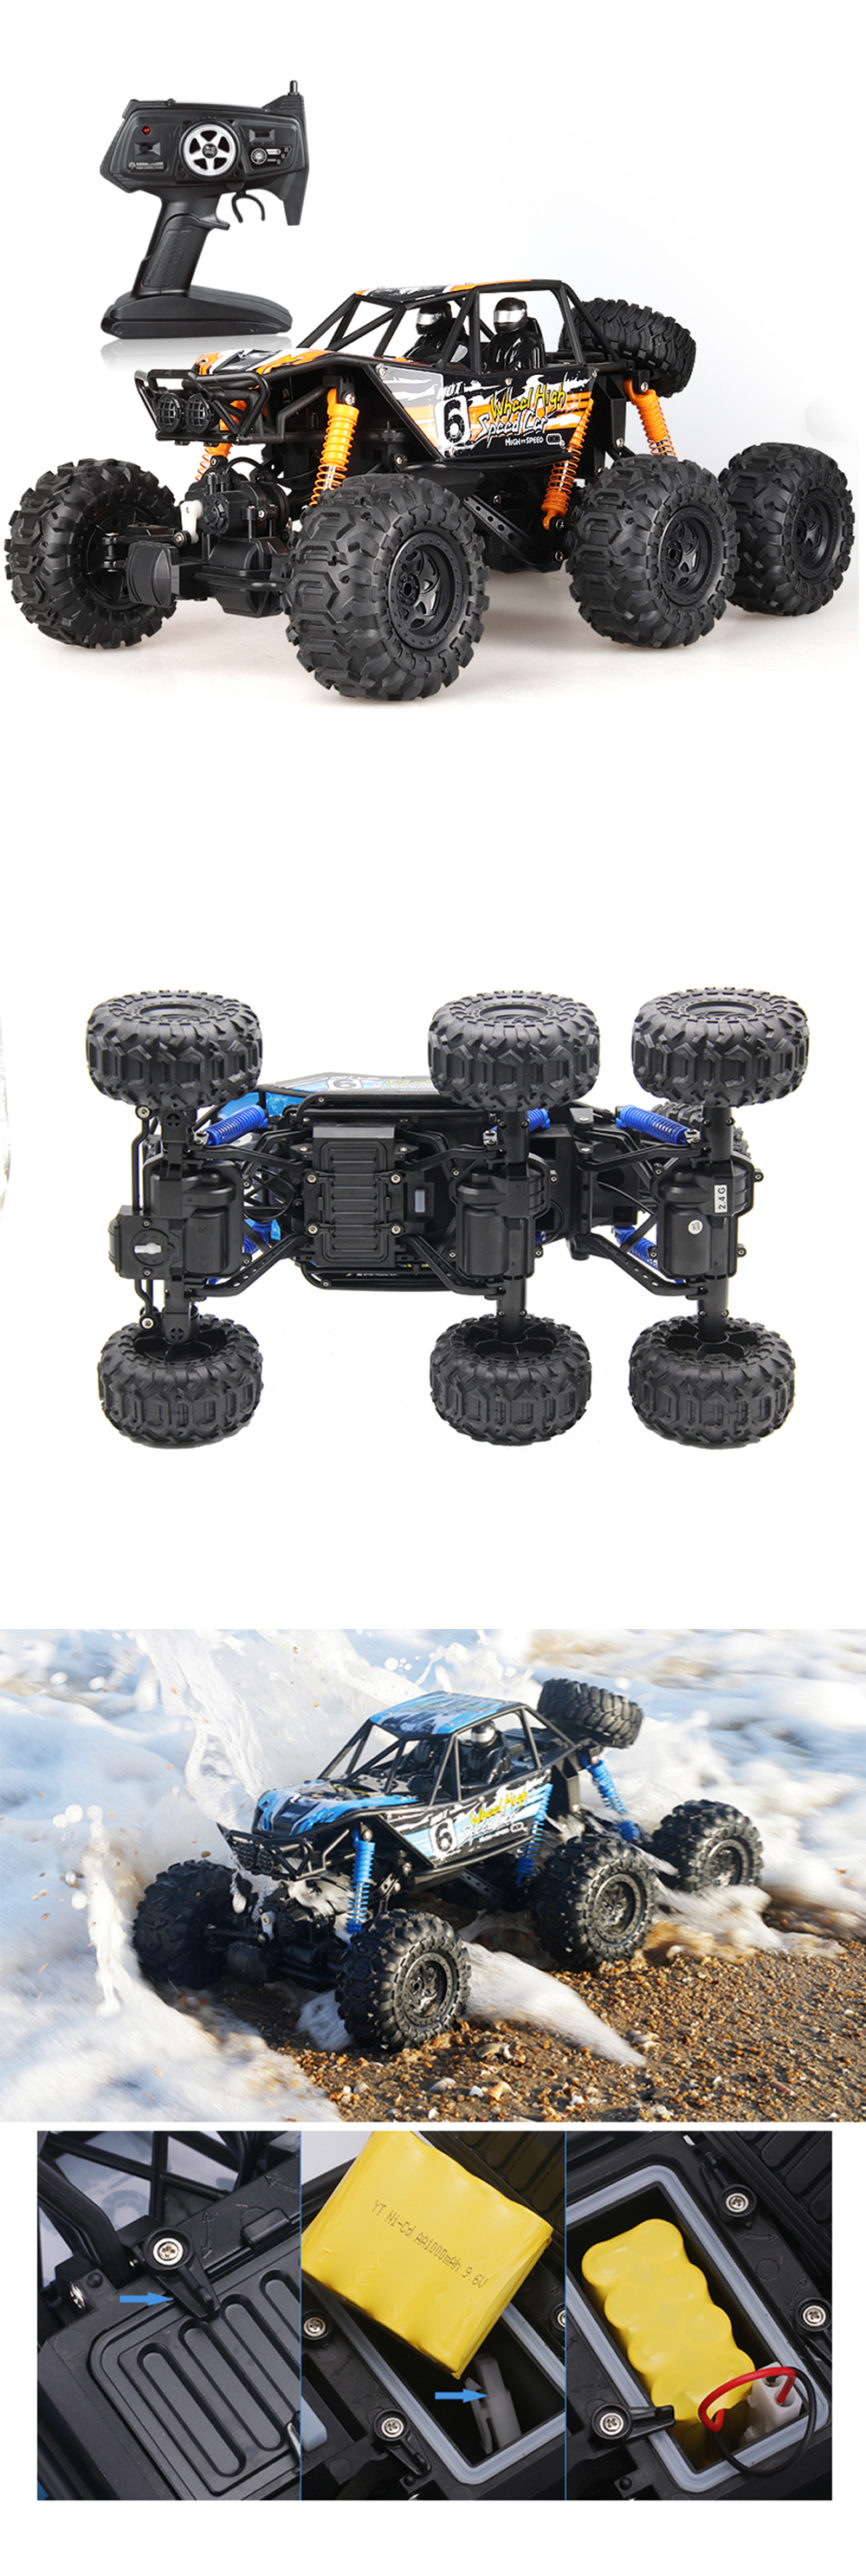 2.4G水陆两栖遥控攀爬车2.4G 1:8玩具车遥控车YY2001 - 遥控攀爬车 - 1